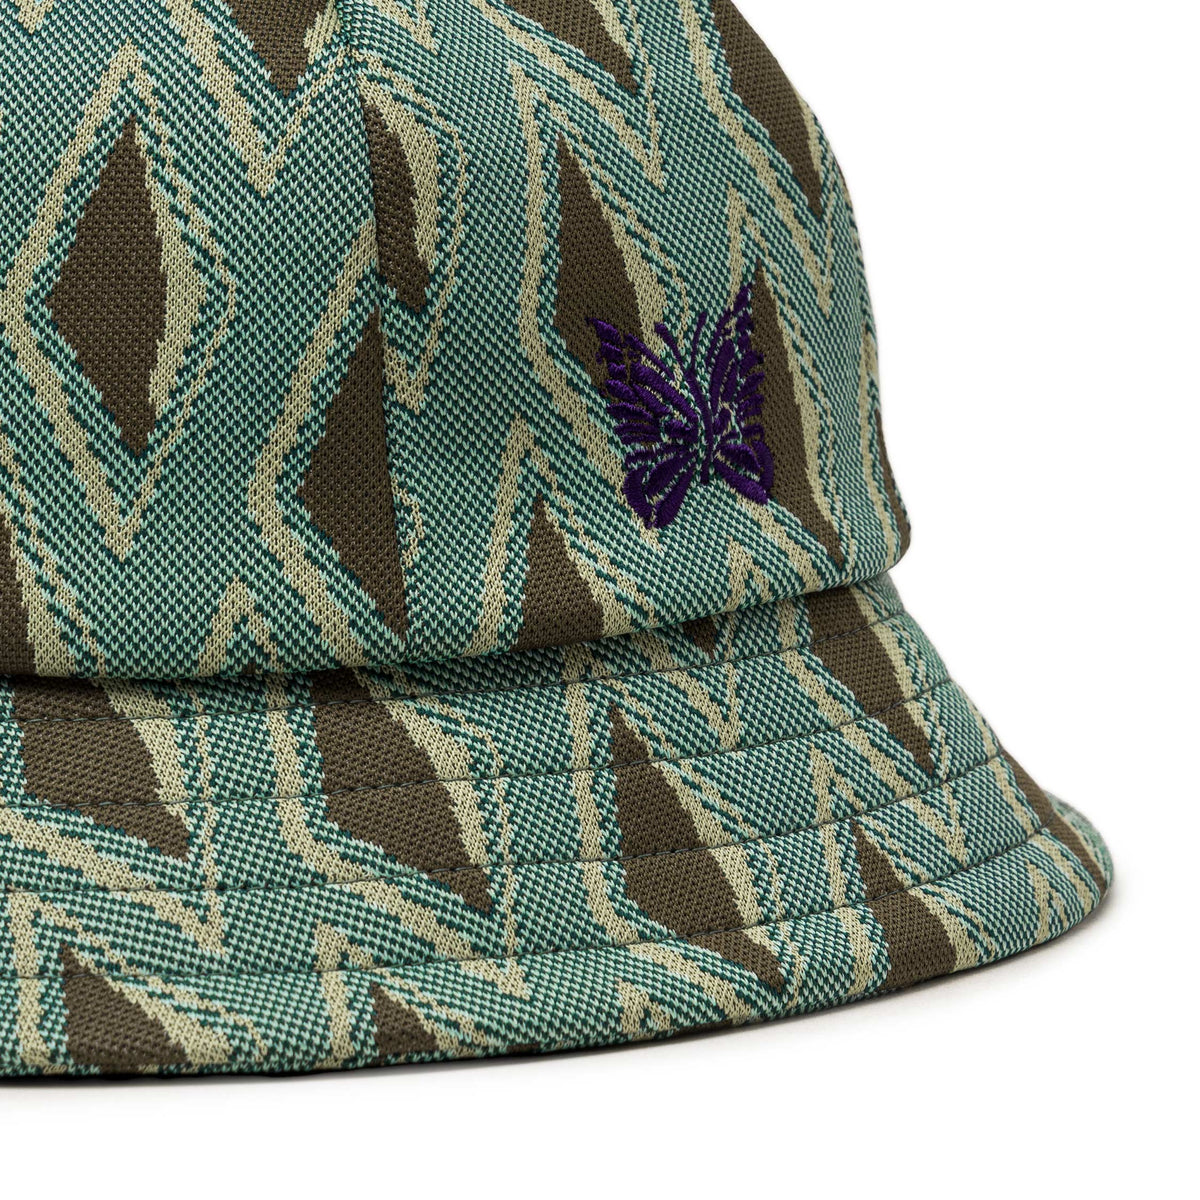 Needles Bermuda Hat - Poly Jq. » Buy online now!